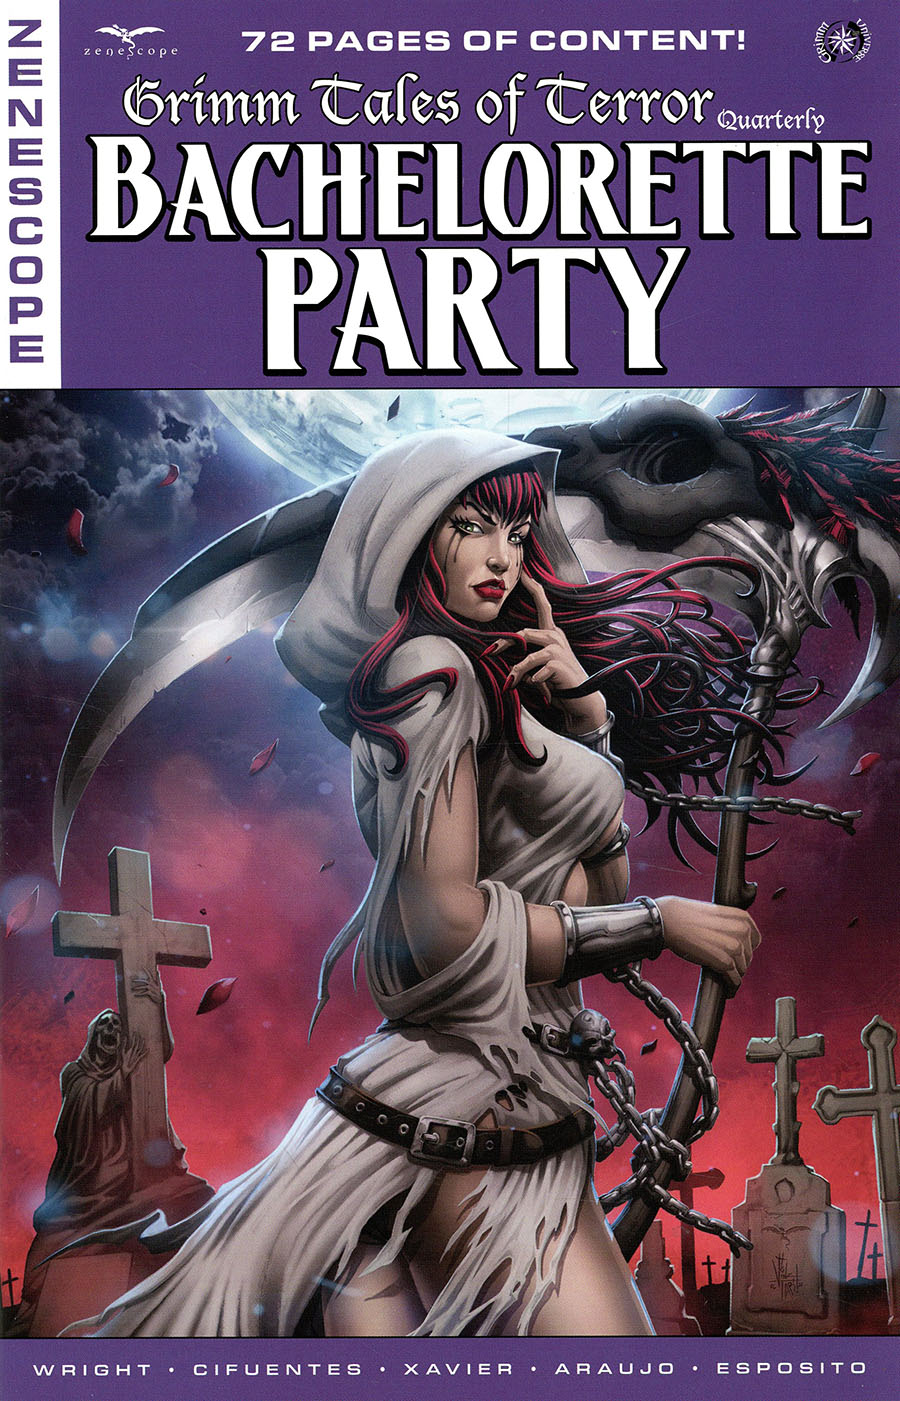 Grimm Fairy Tales Presents Grimm Tales Of Terror Quarterly #4 Bachelorette Party Cover D Vinz El Tabanas